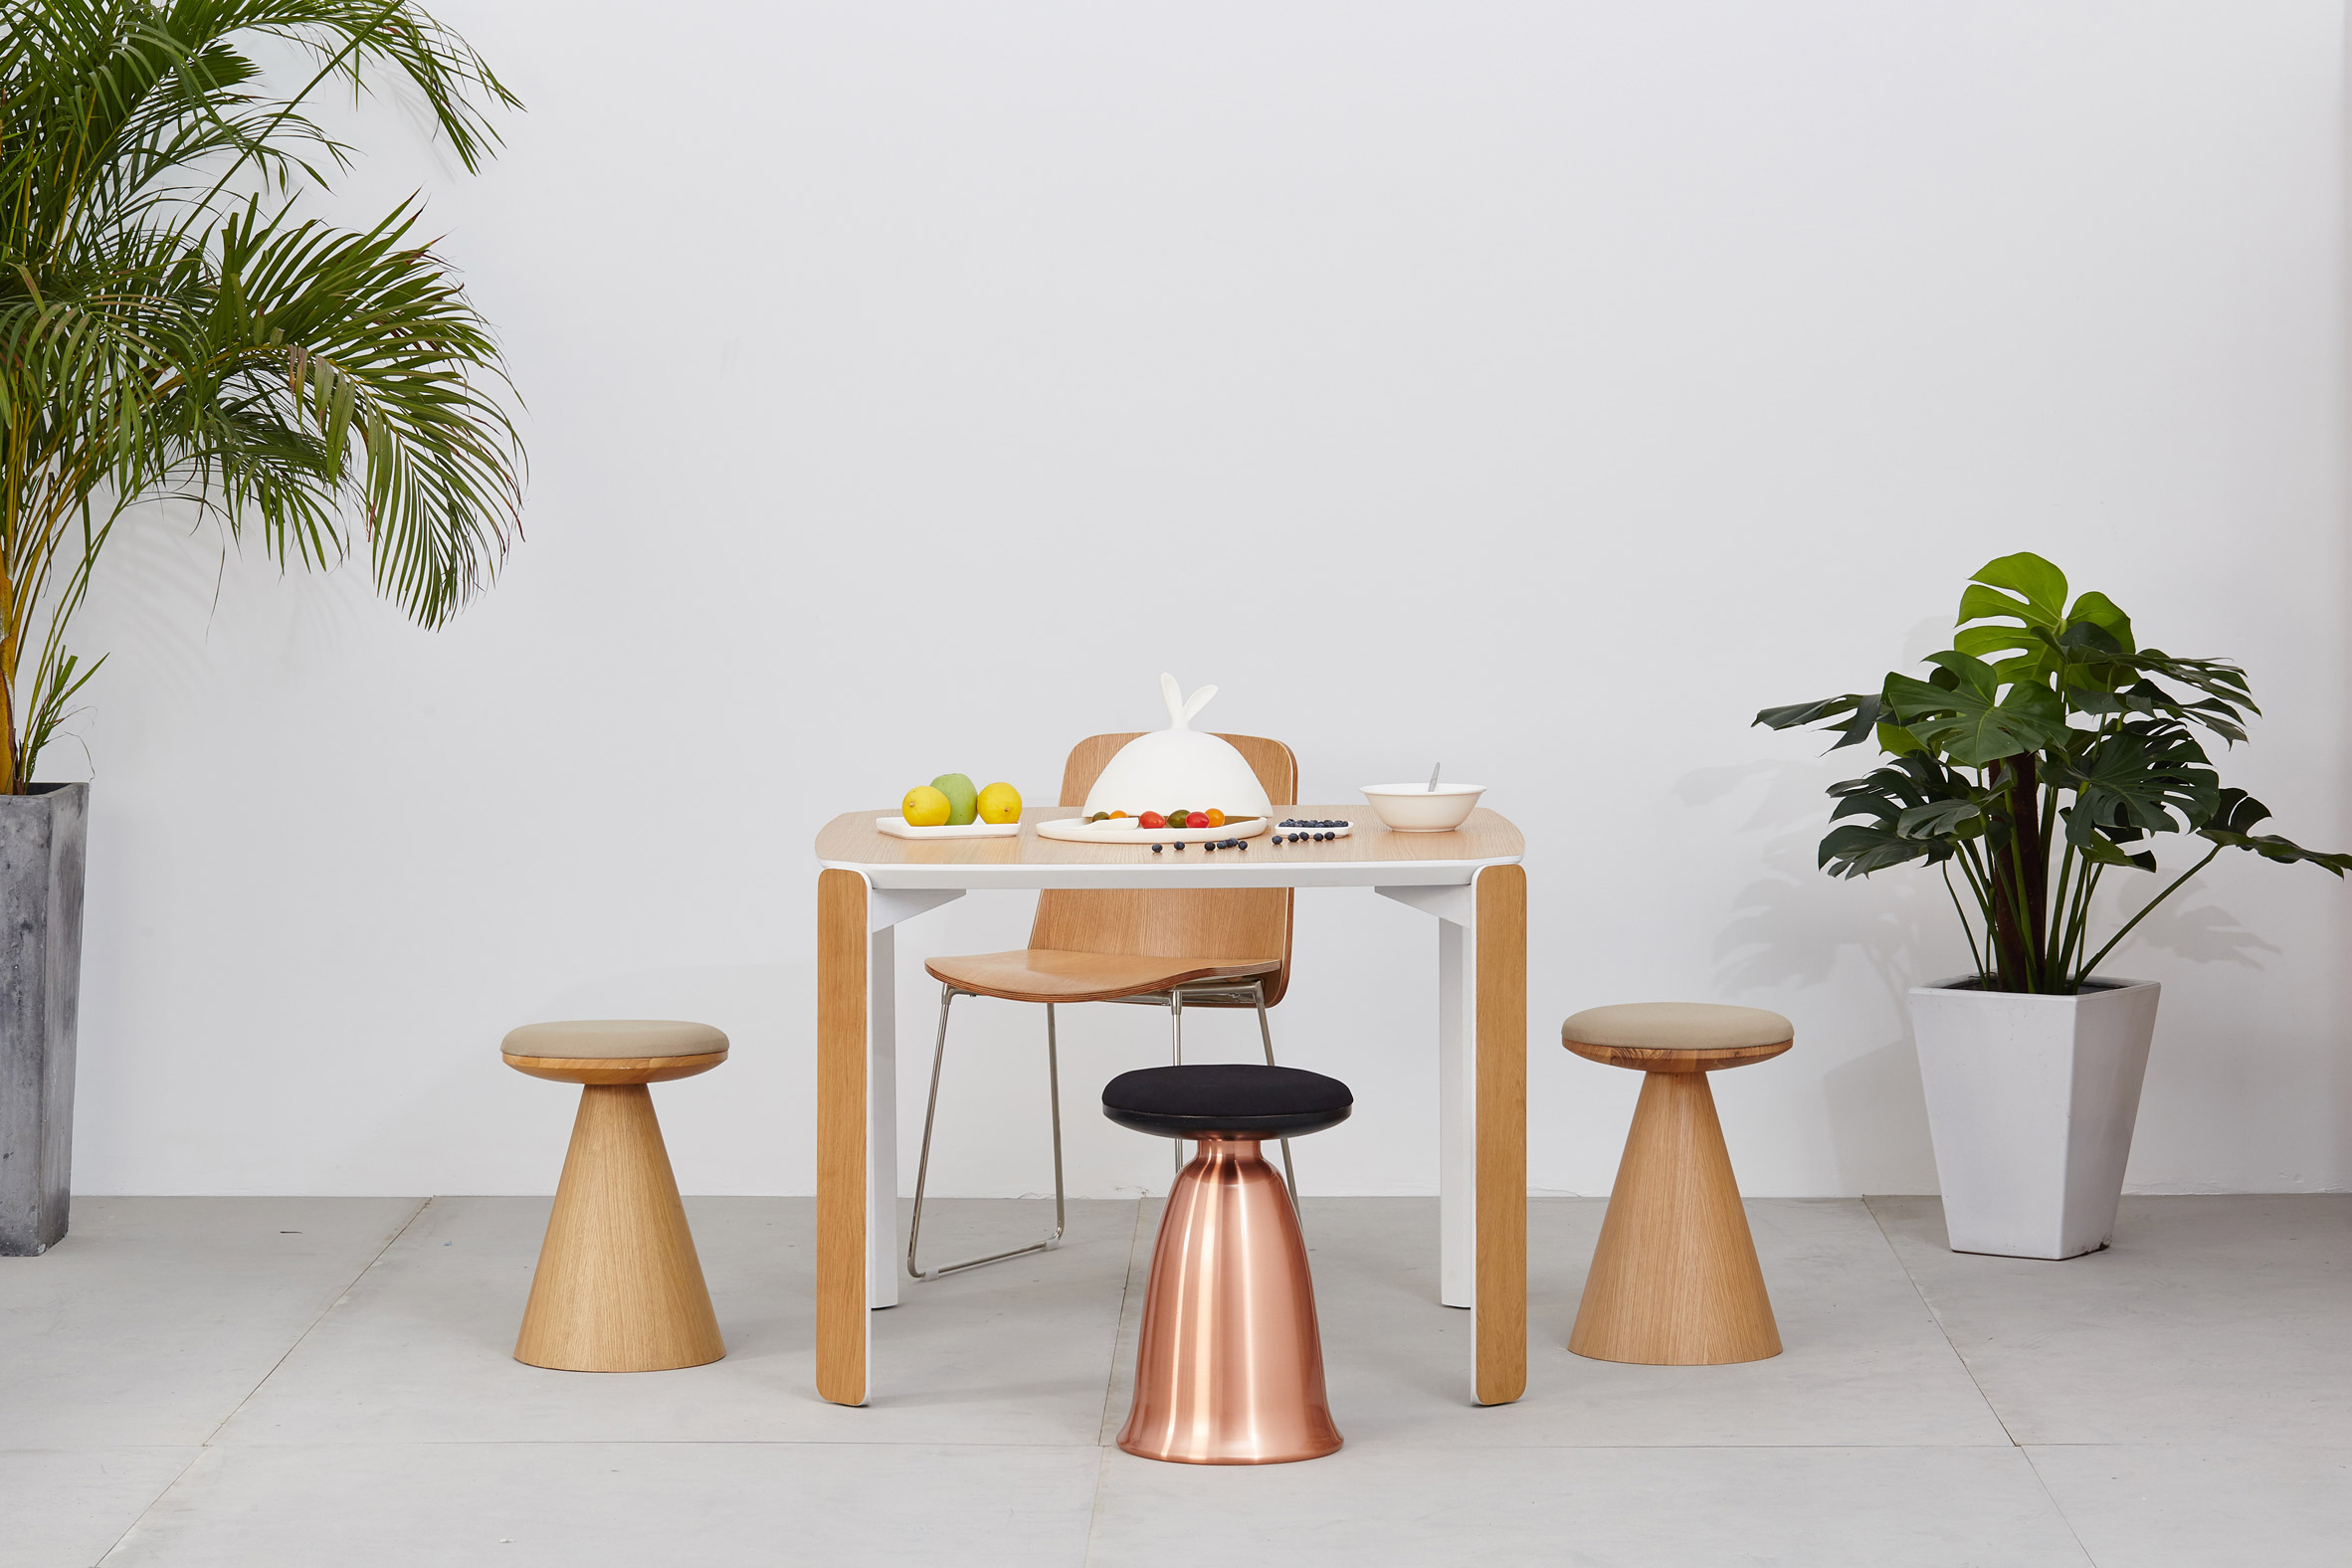 45-table-system-inyard-la-selva-design-furniture_dezeen_2364_col_15